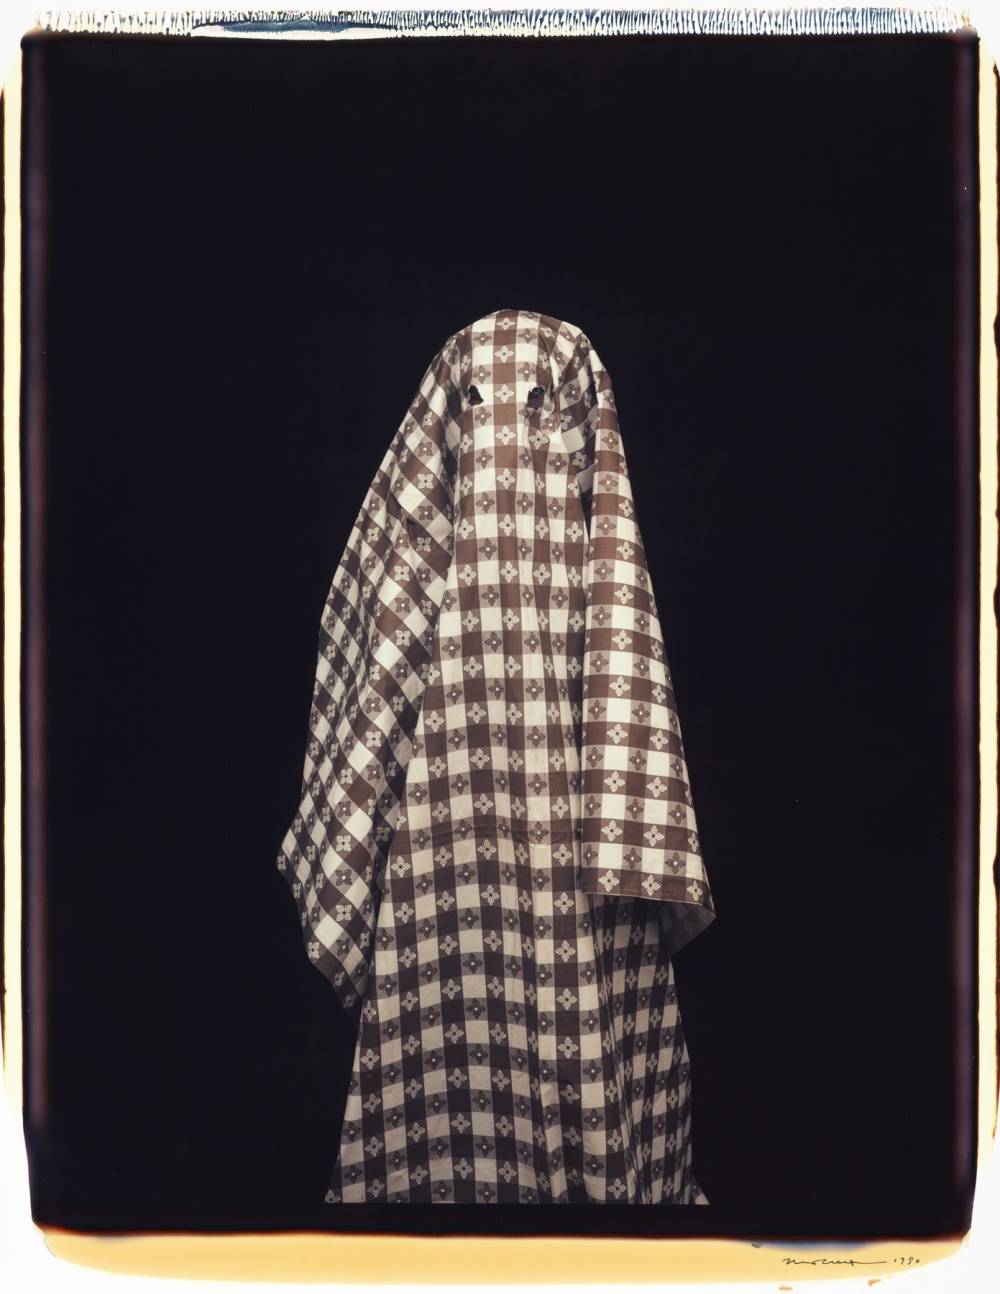  William Wegman , Of the Cloth, 1990 